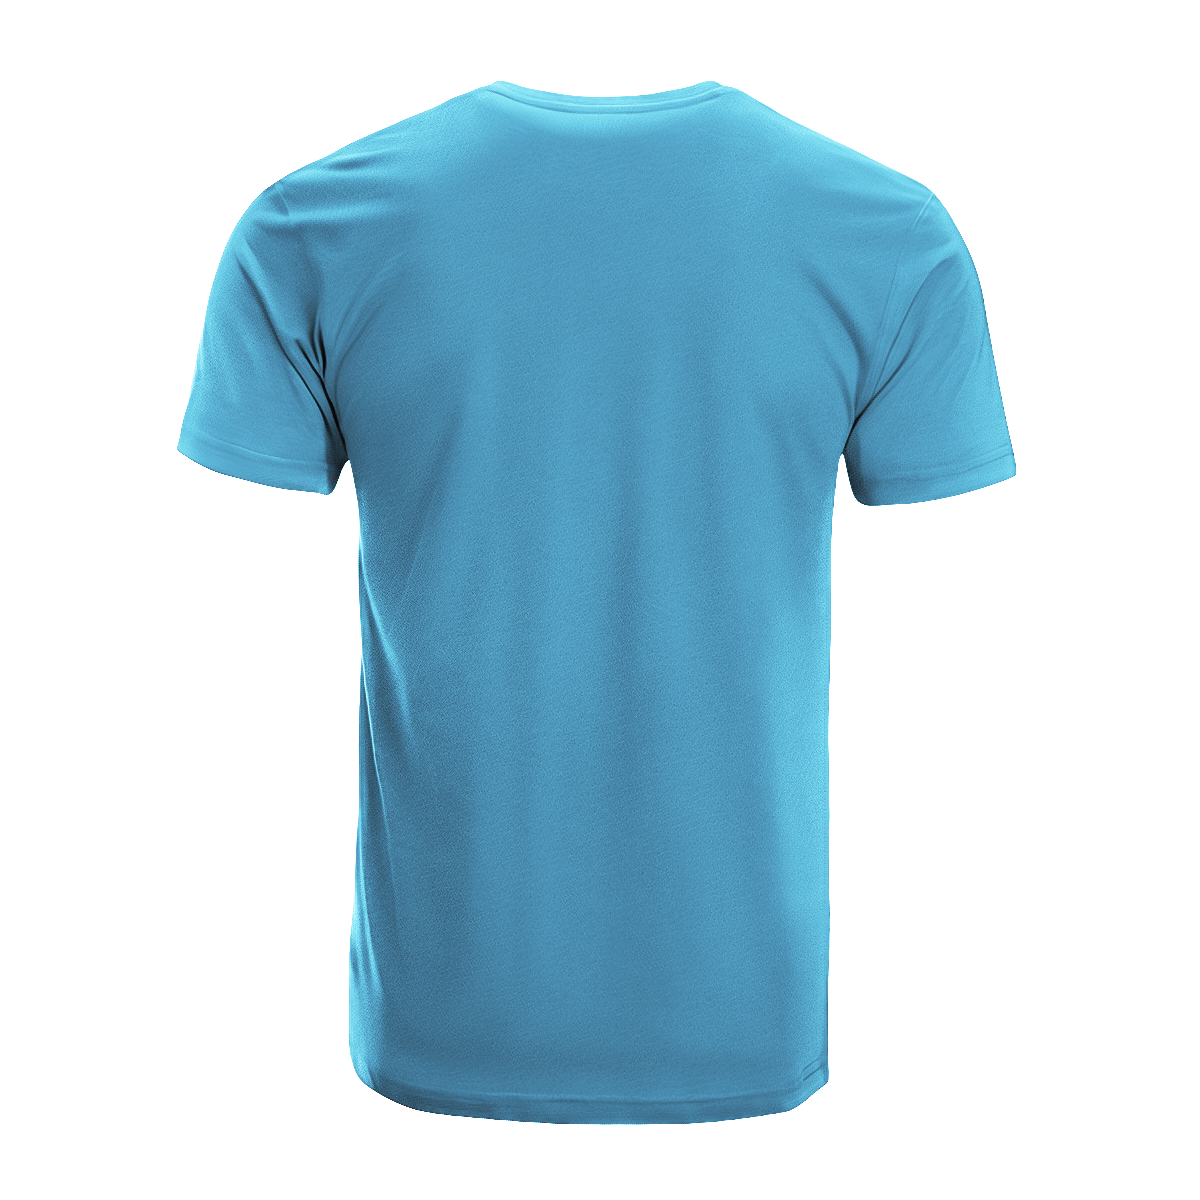 Ramsay Tartan Crest T-shirt - I'm not yelling style